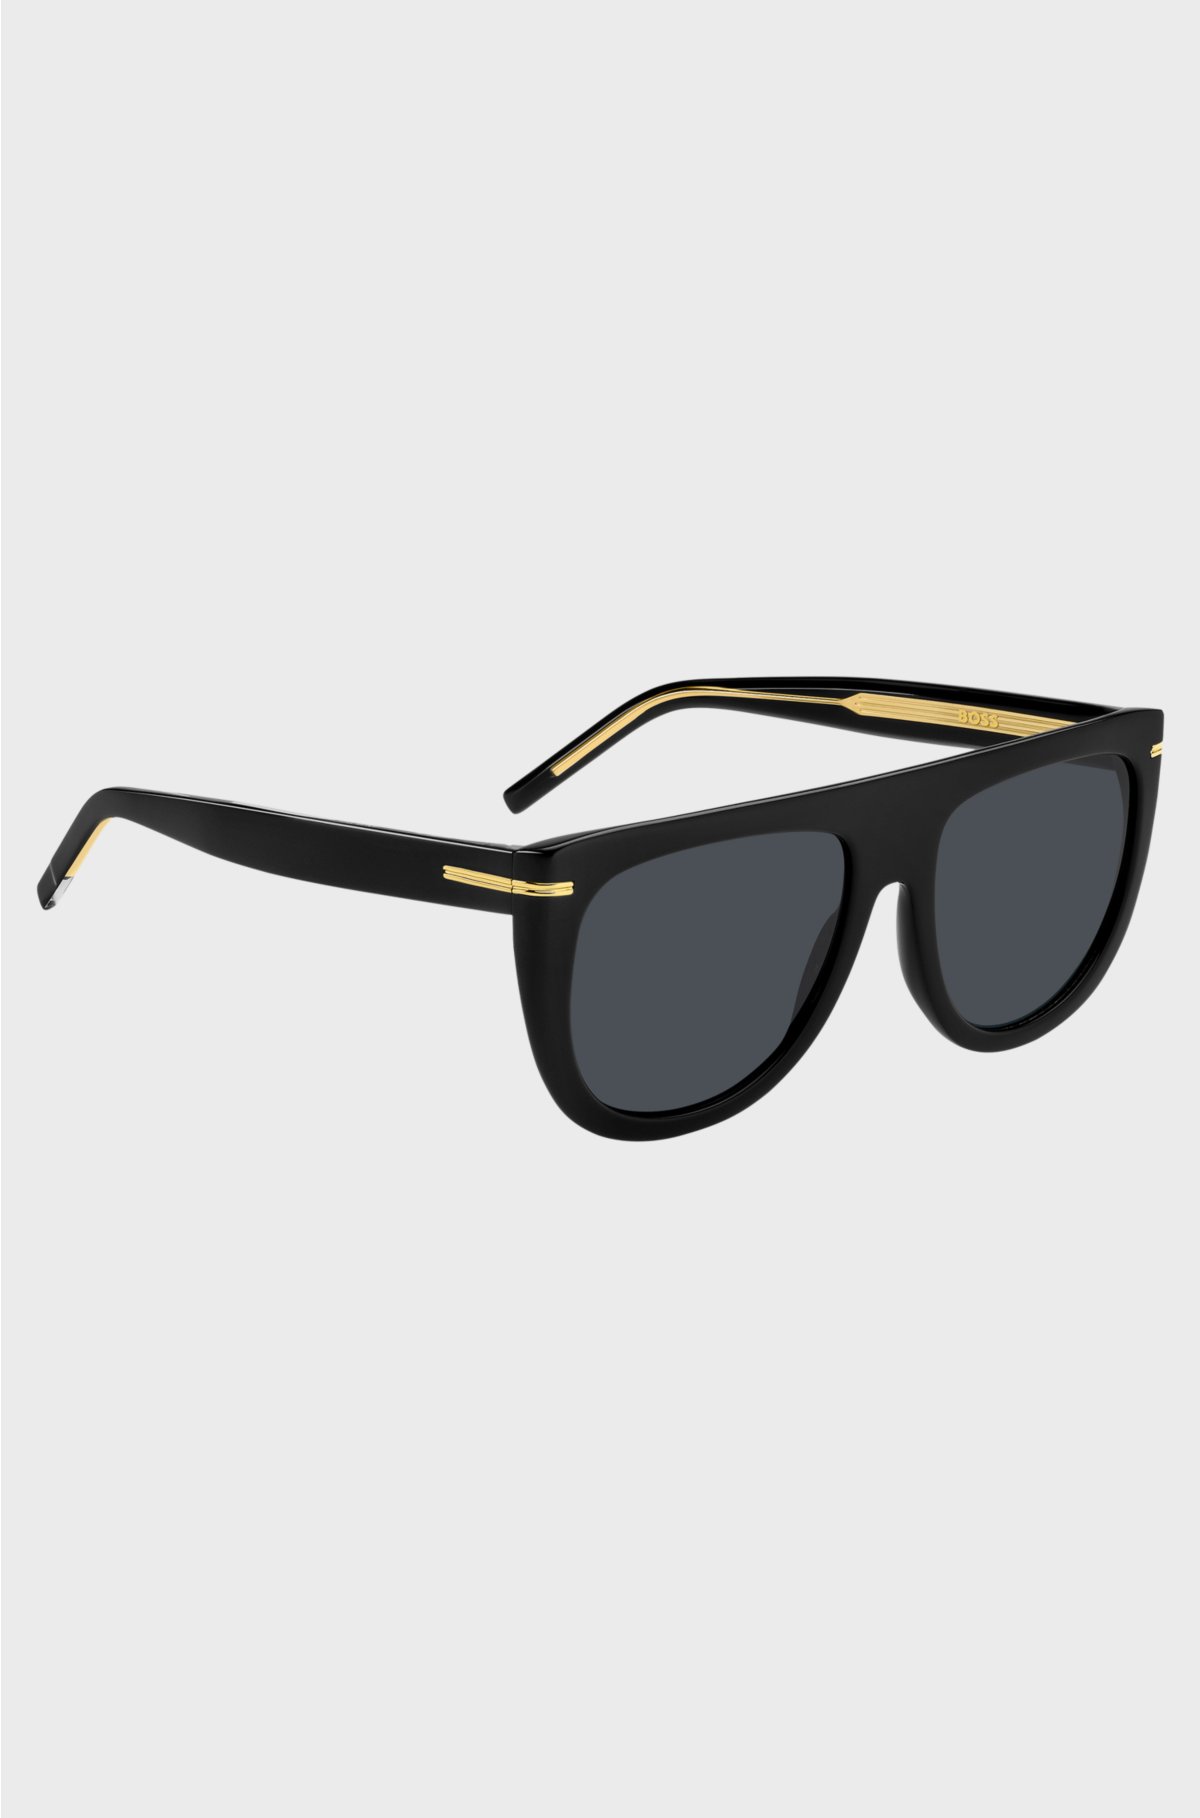 Black-acetate sunglasses with gold-tone hardware, Black